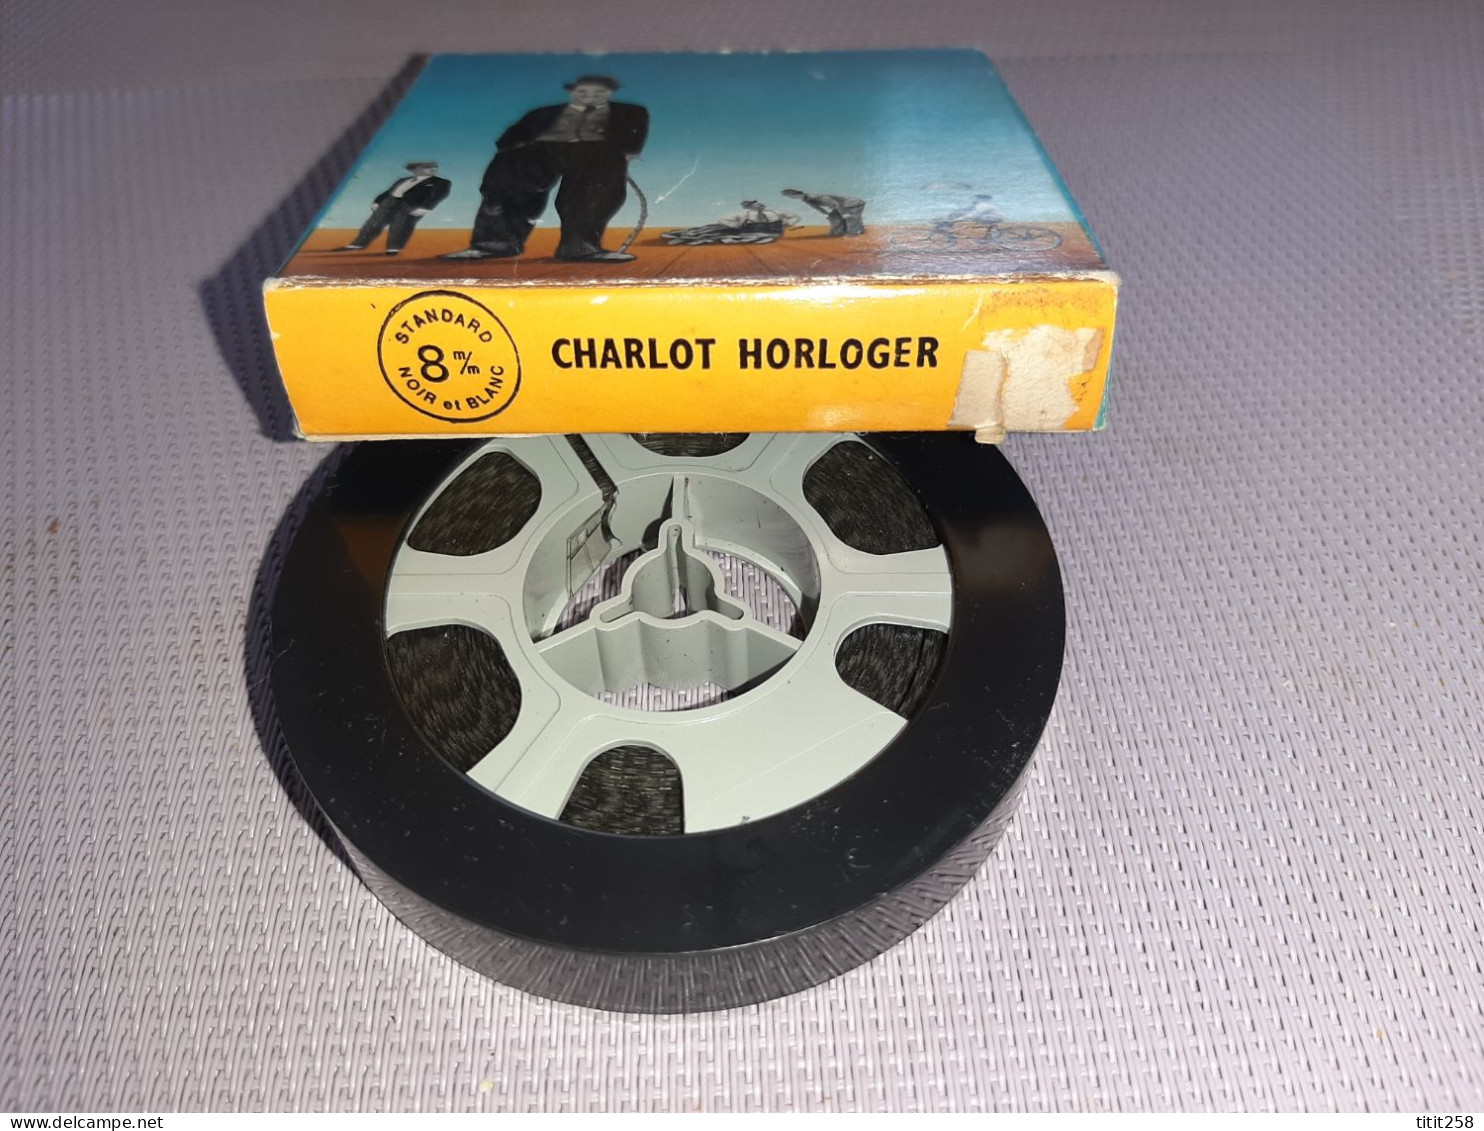 Film Charlie Chaplin Super 8 Charlot Horloger - 35mm -16mm - 9,5+8+S8mm Film Rolls